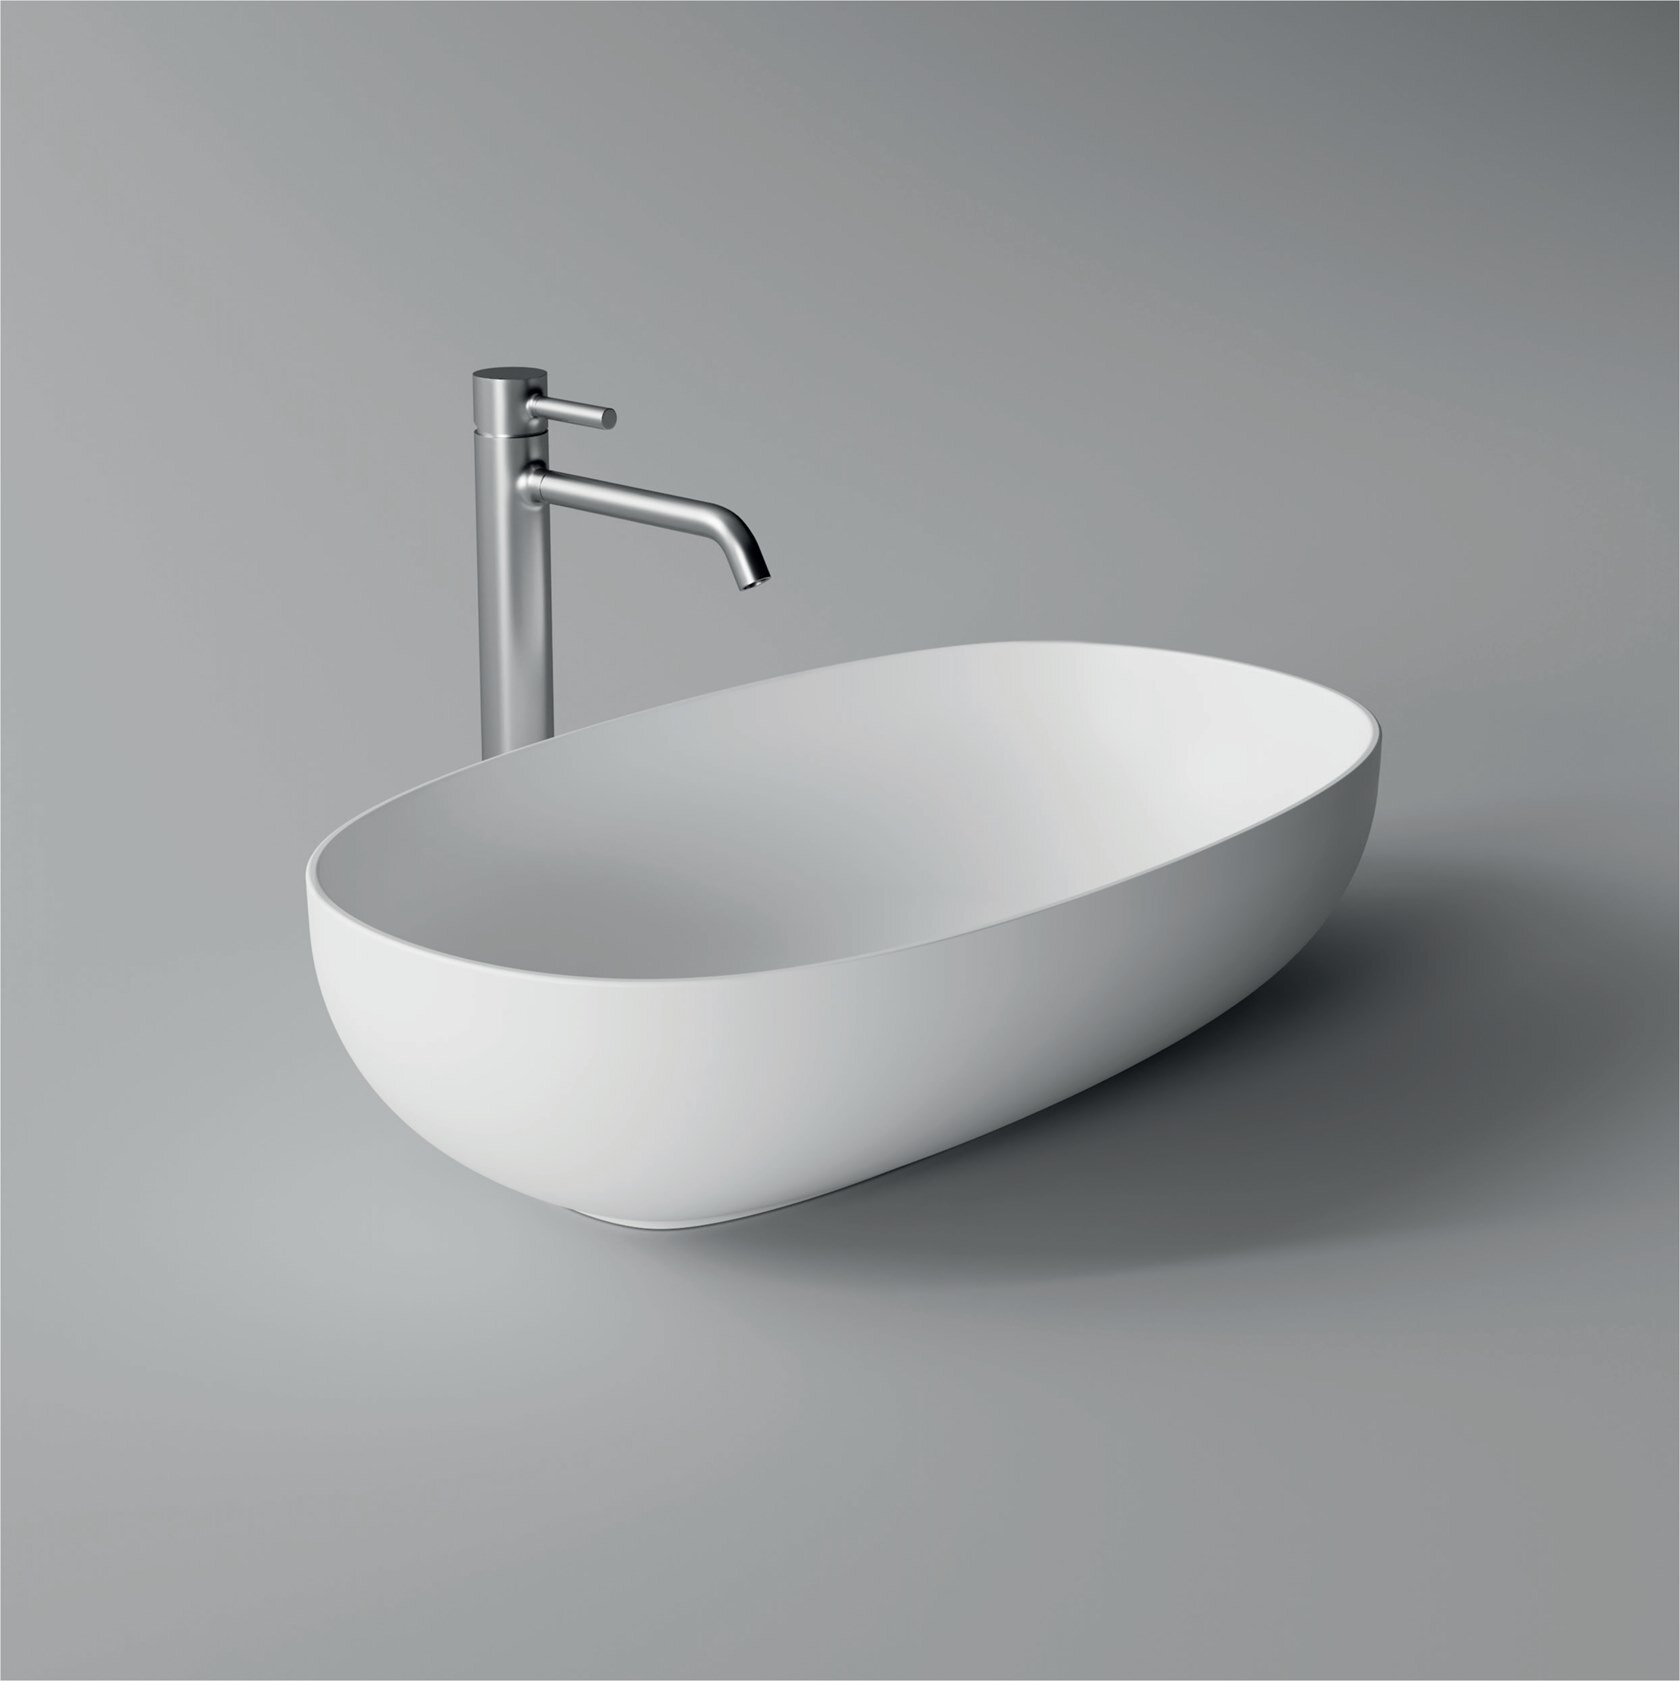 2b_FORM-Oval-washbasin-Alice-Ceramica-364860-rel832ba560.png